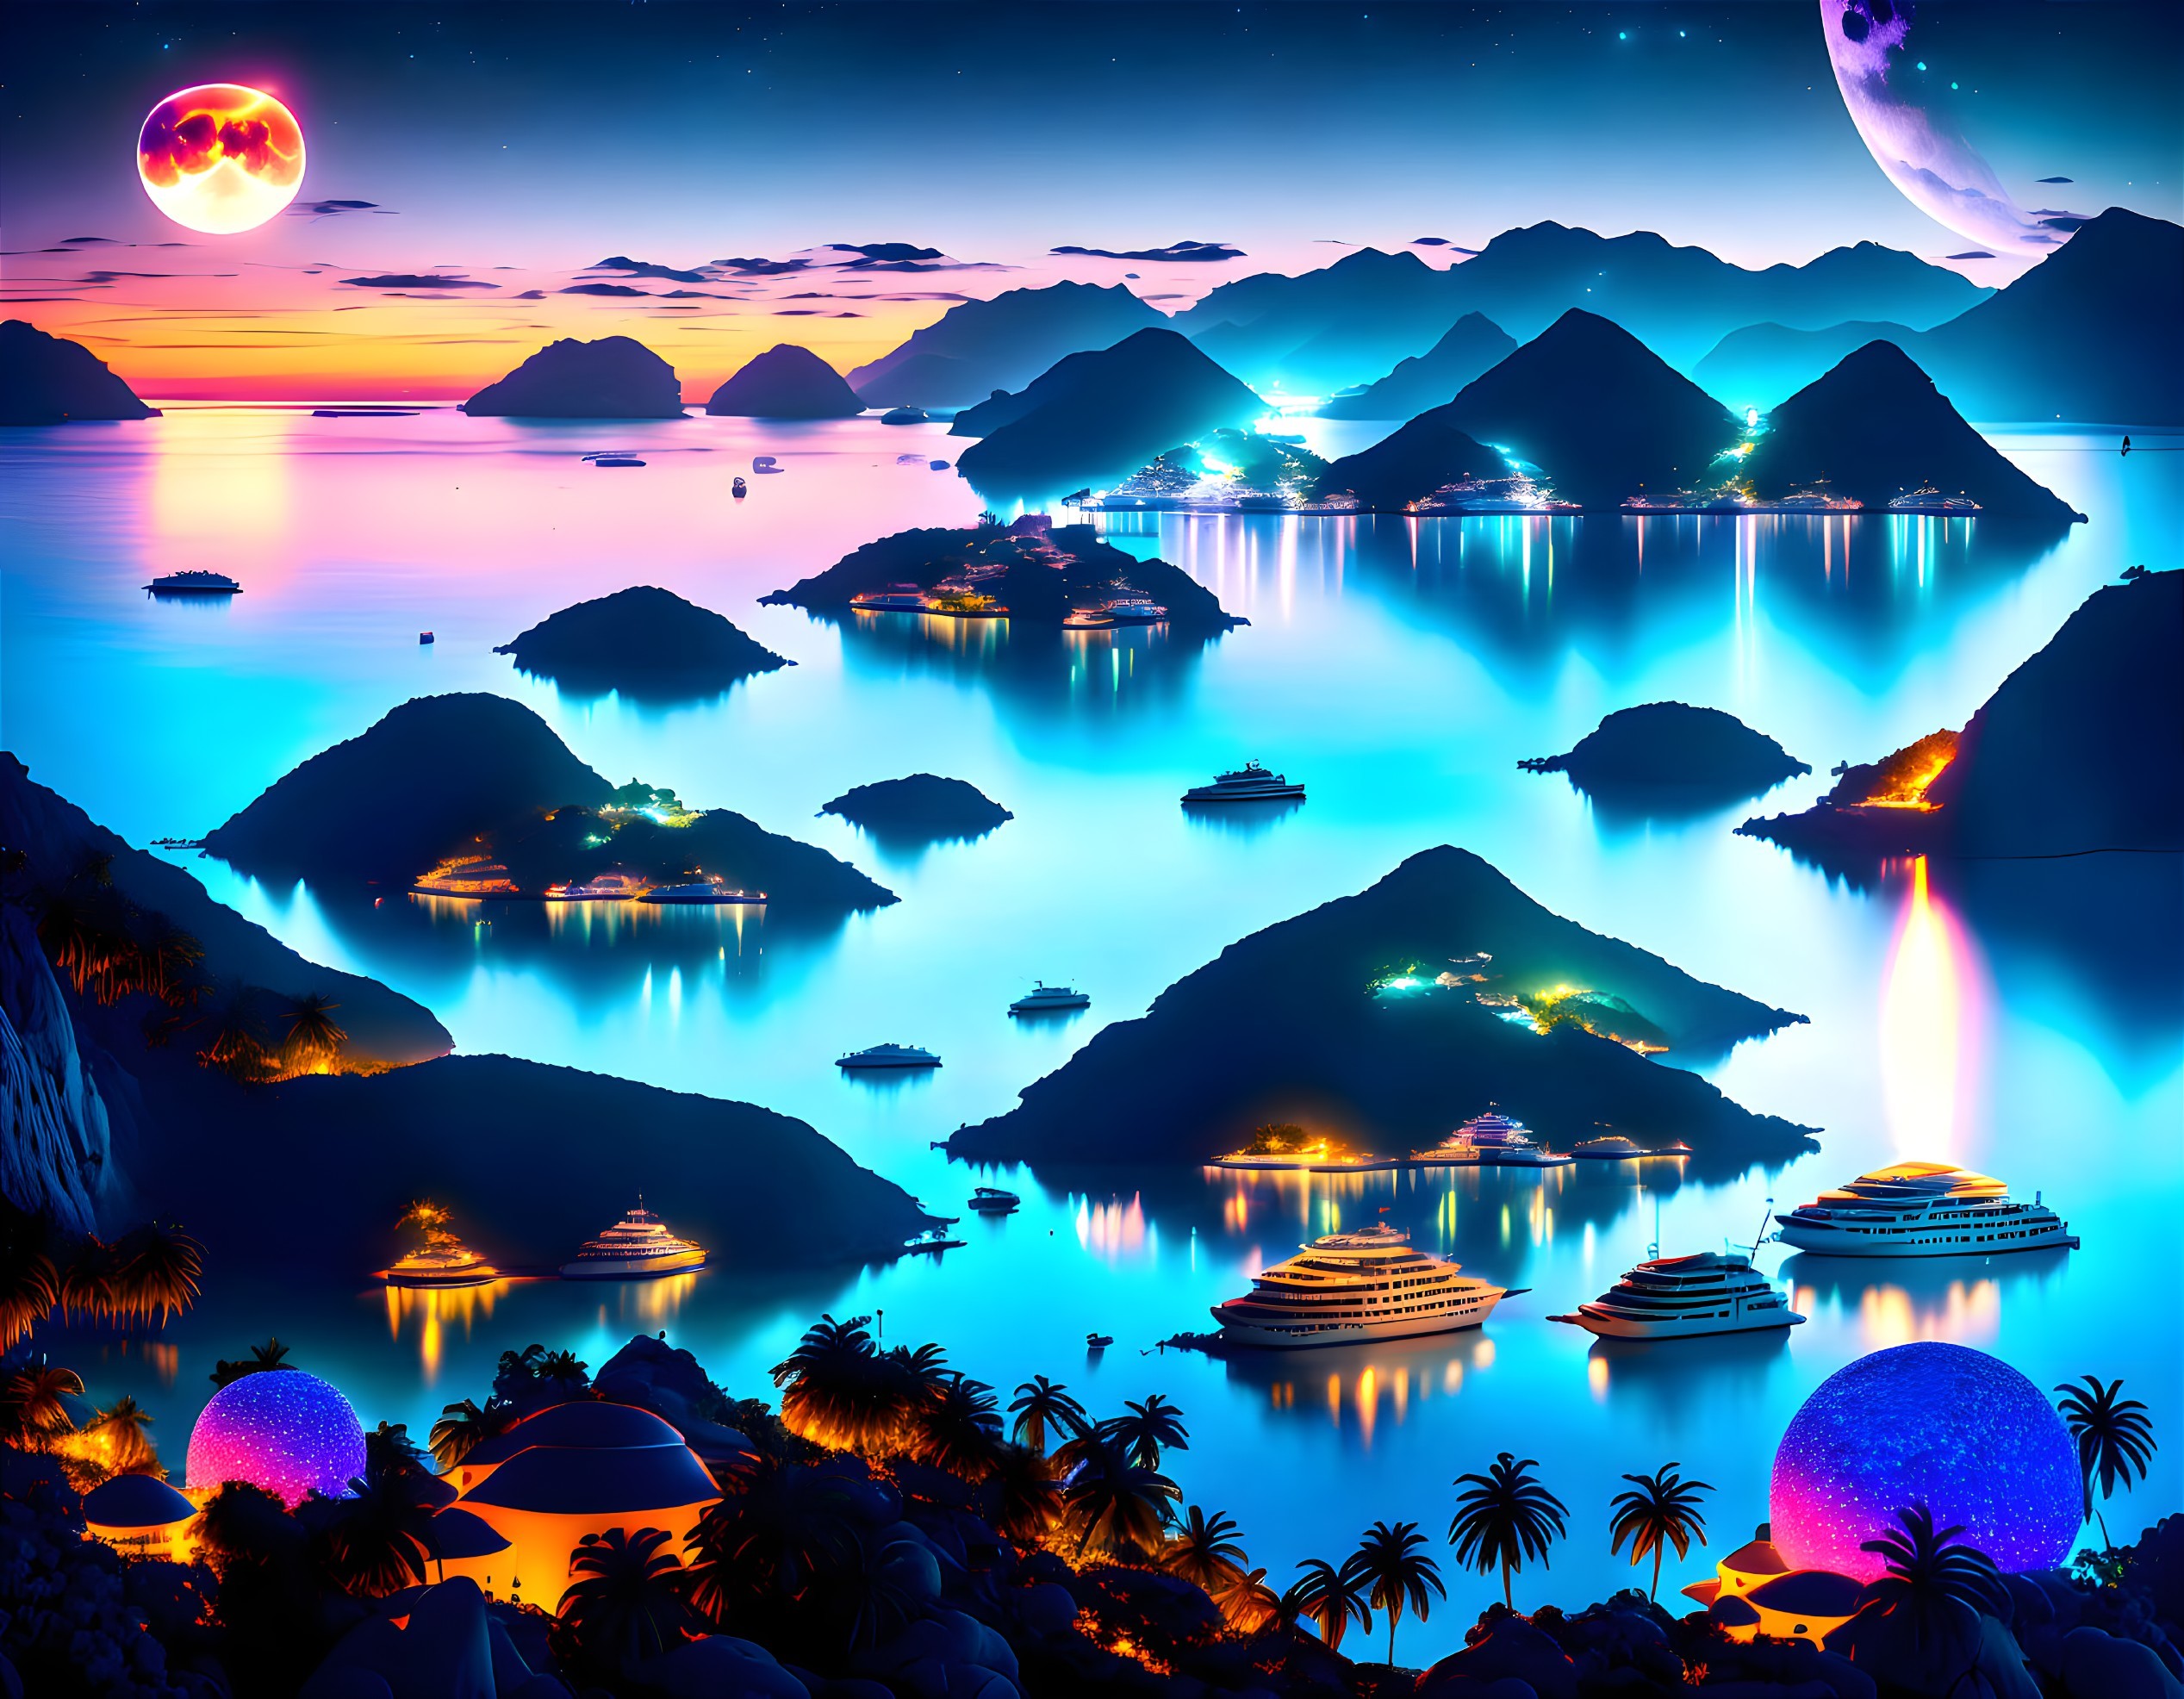 Exquisitely beautiful islandcity in the oceanicbay